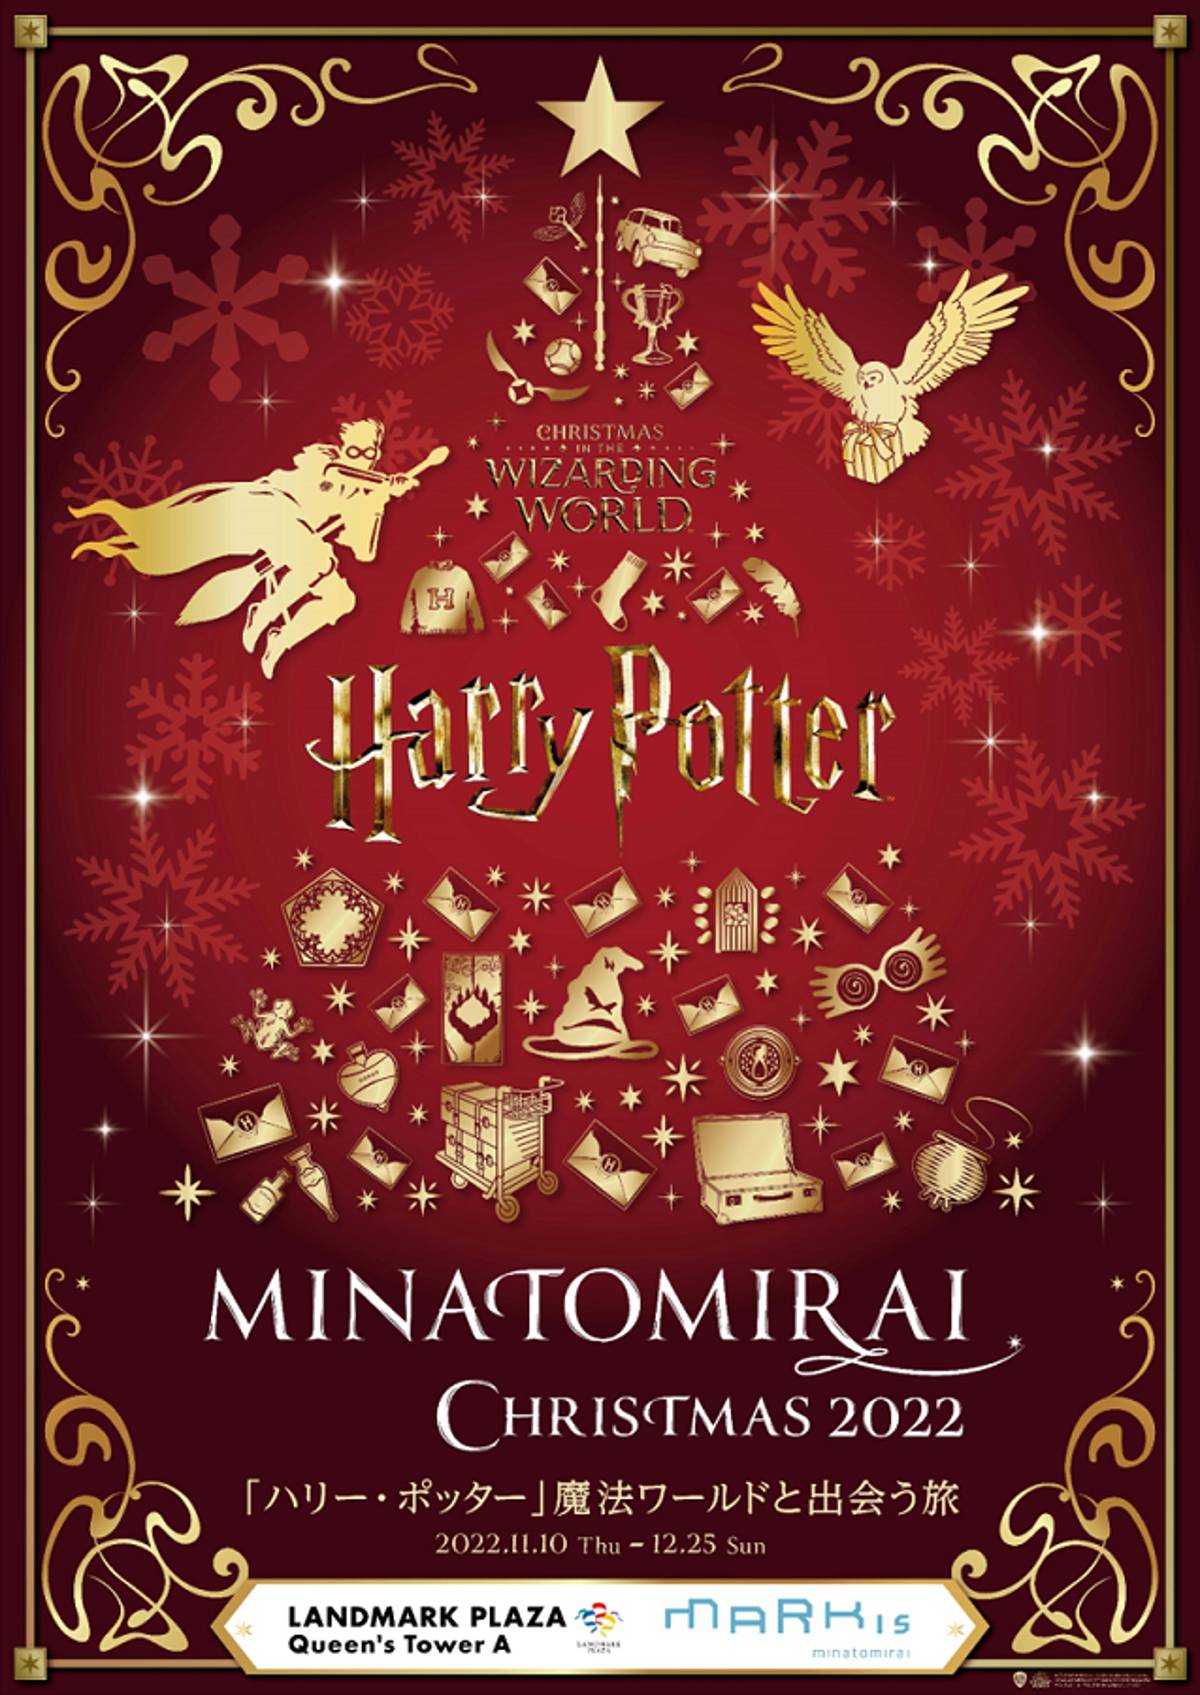 “MINATOMIRAI CHRISTMAS 2022 「ハリー・ポッター」魔法ワールドと出会う旅”